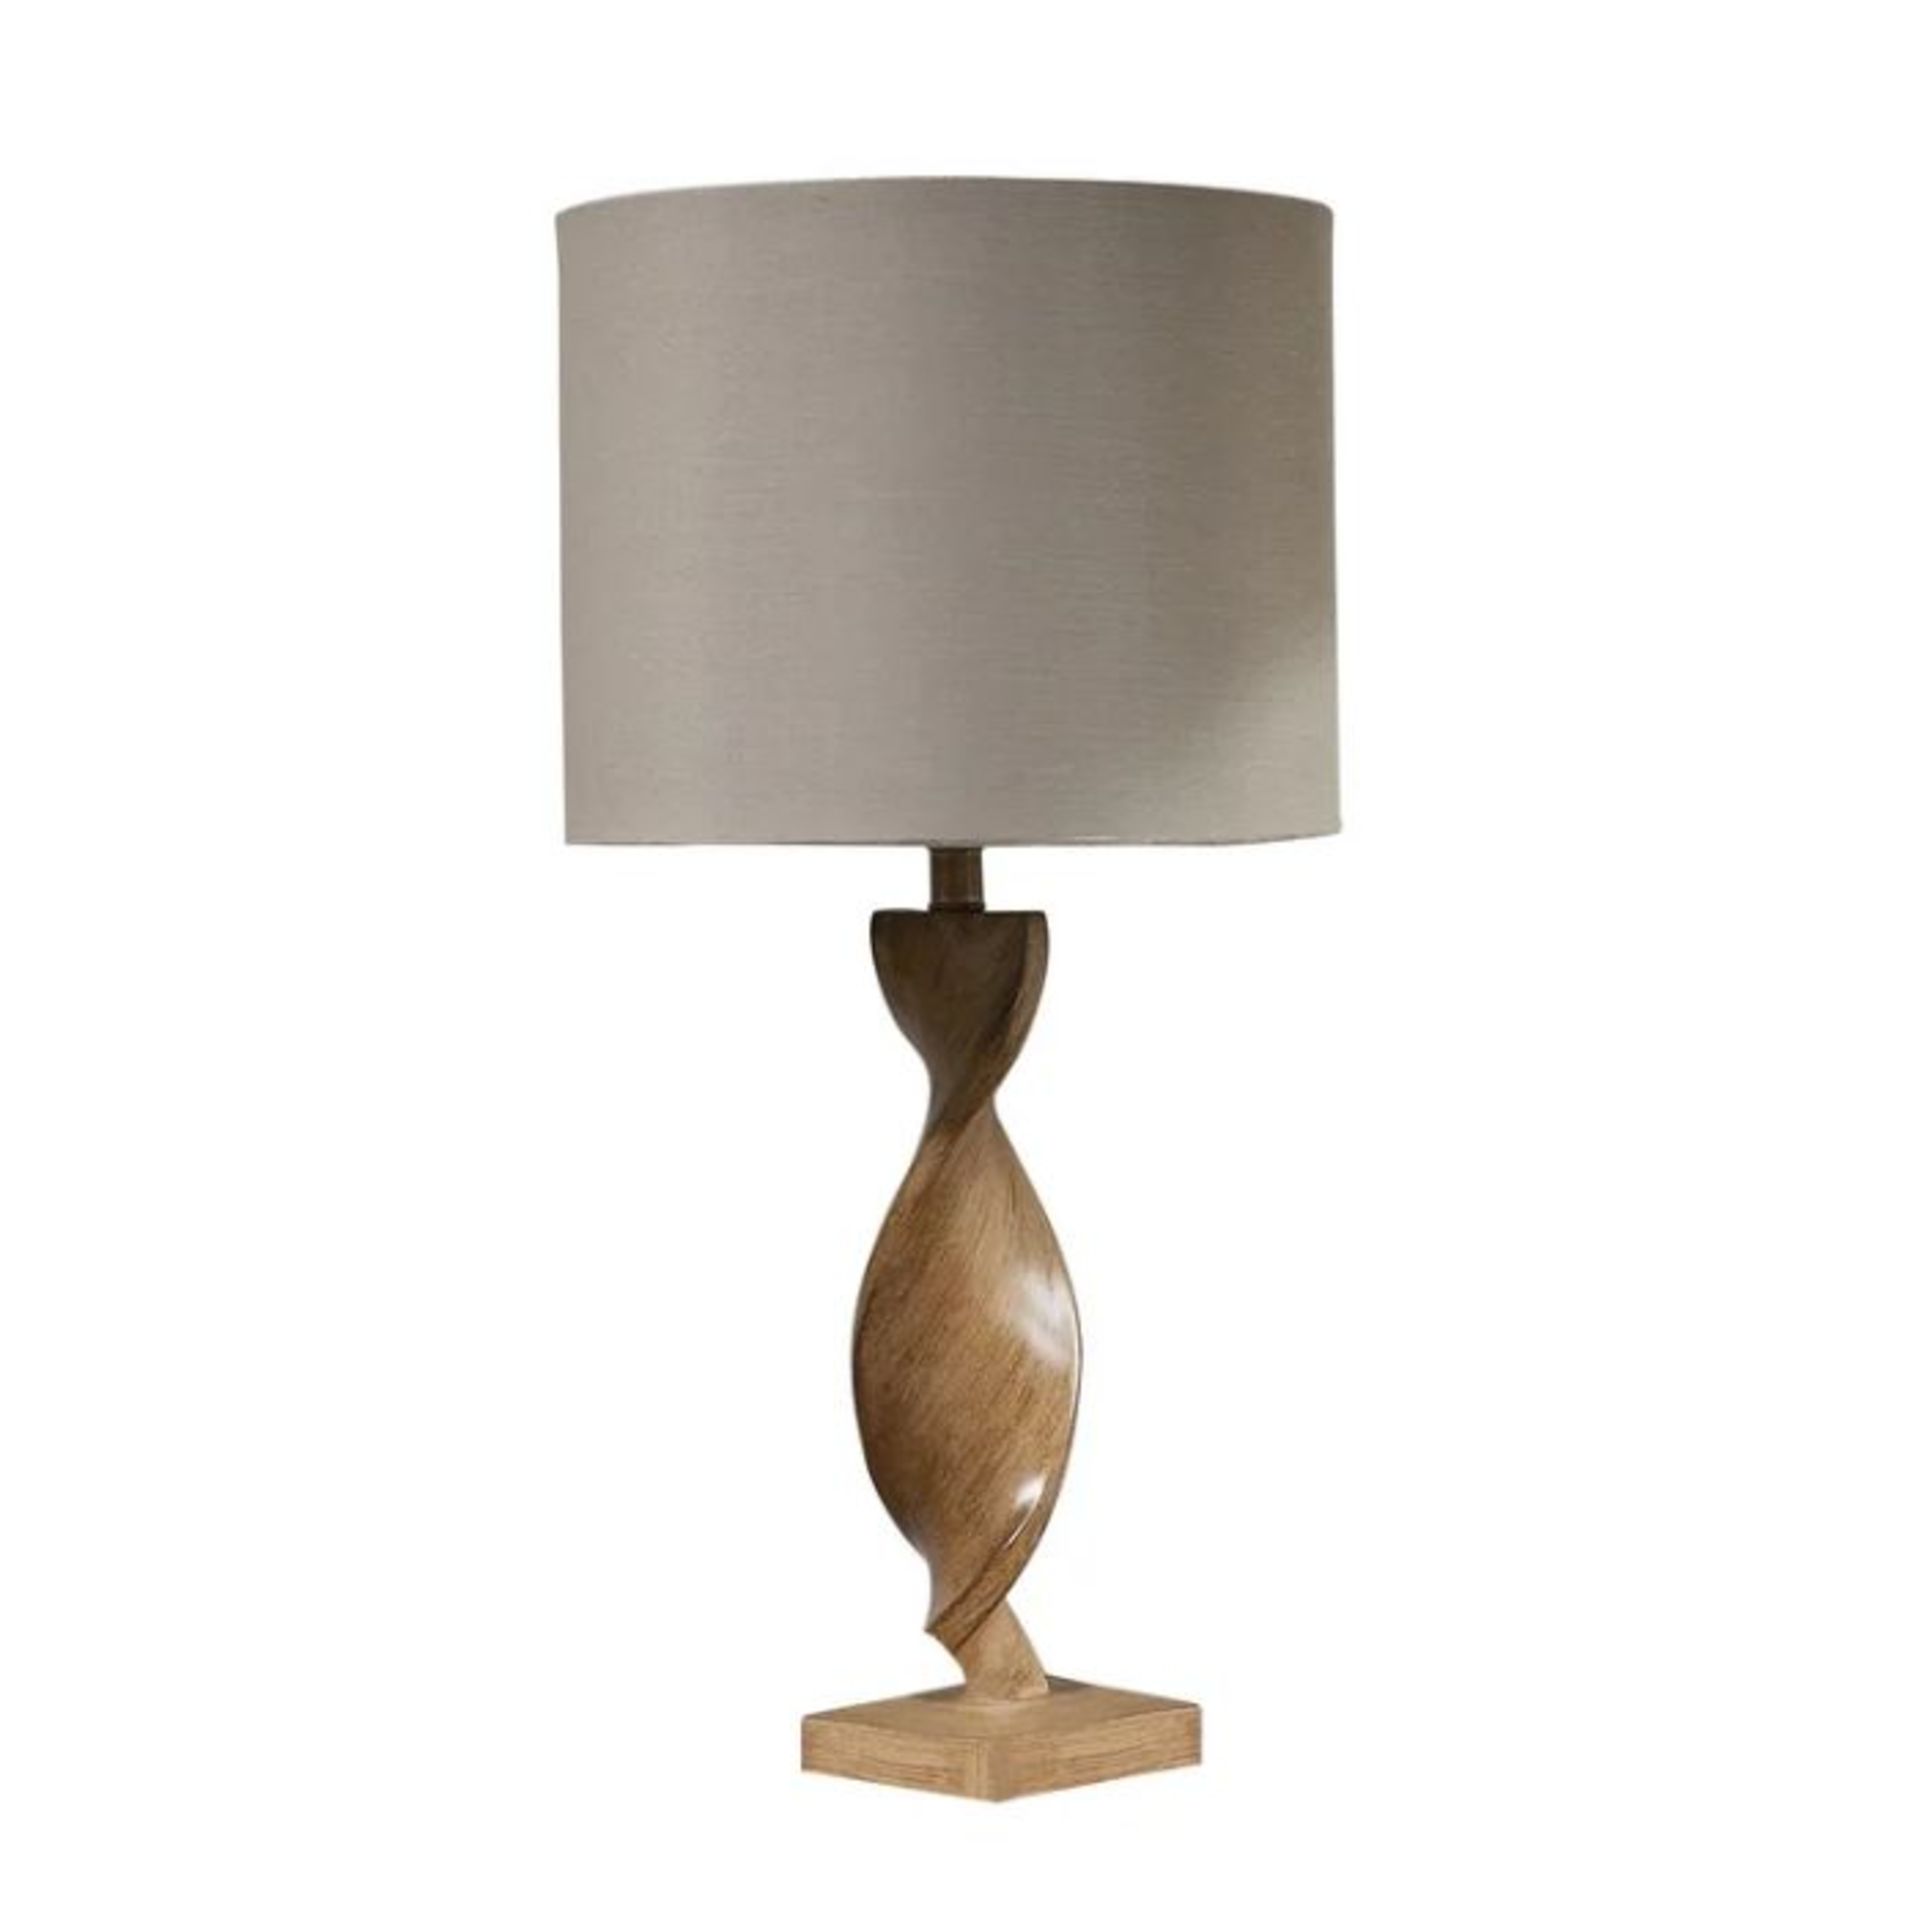 ClassicLiving, Whiffletree 66cm Table Lamp (NATURAL OAK BASE & CREAM SHADE FINISH) - RRP £59.99 (